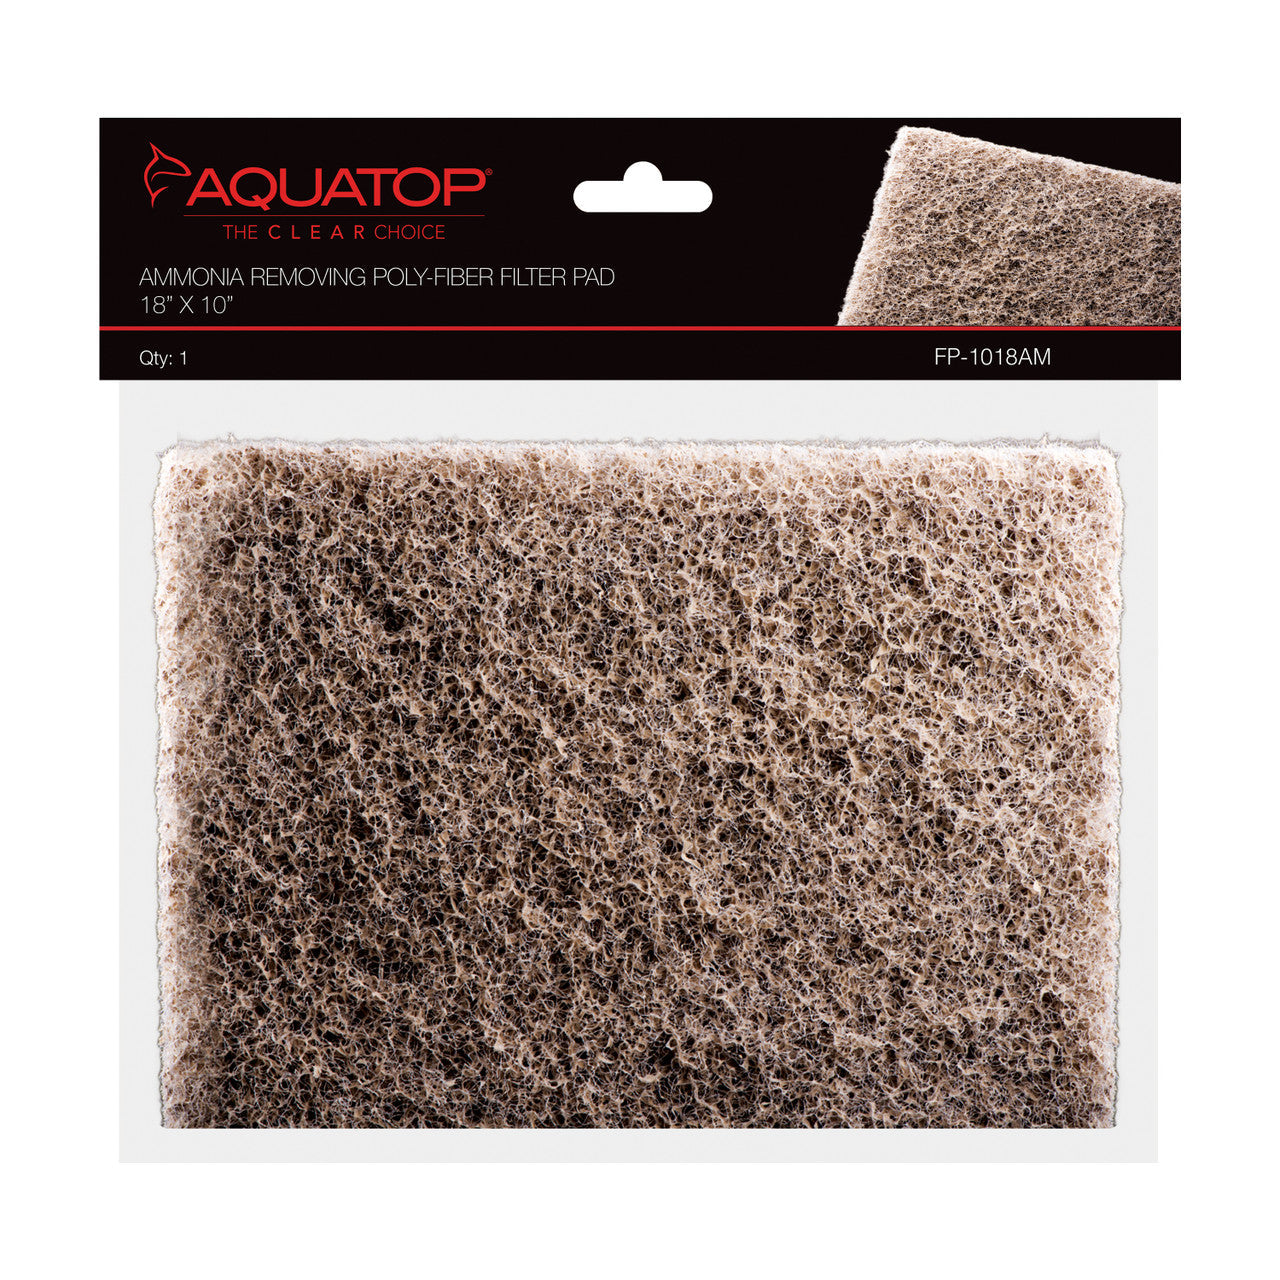 Aquatop Ammonia Removing Poly-fiber Filter Pad 18x10, 1pc